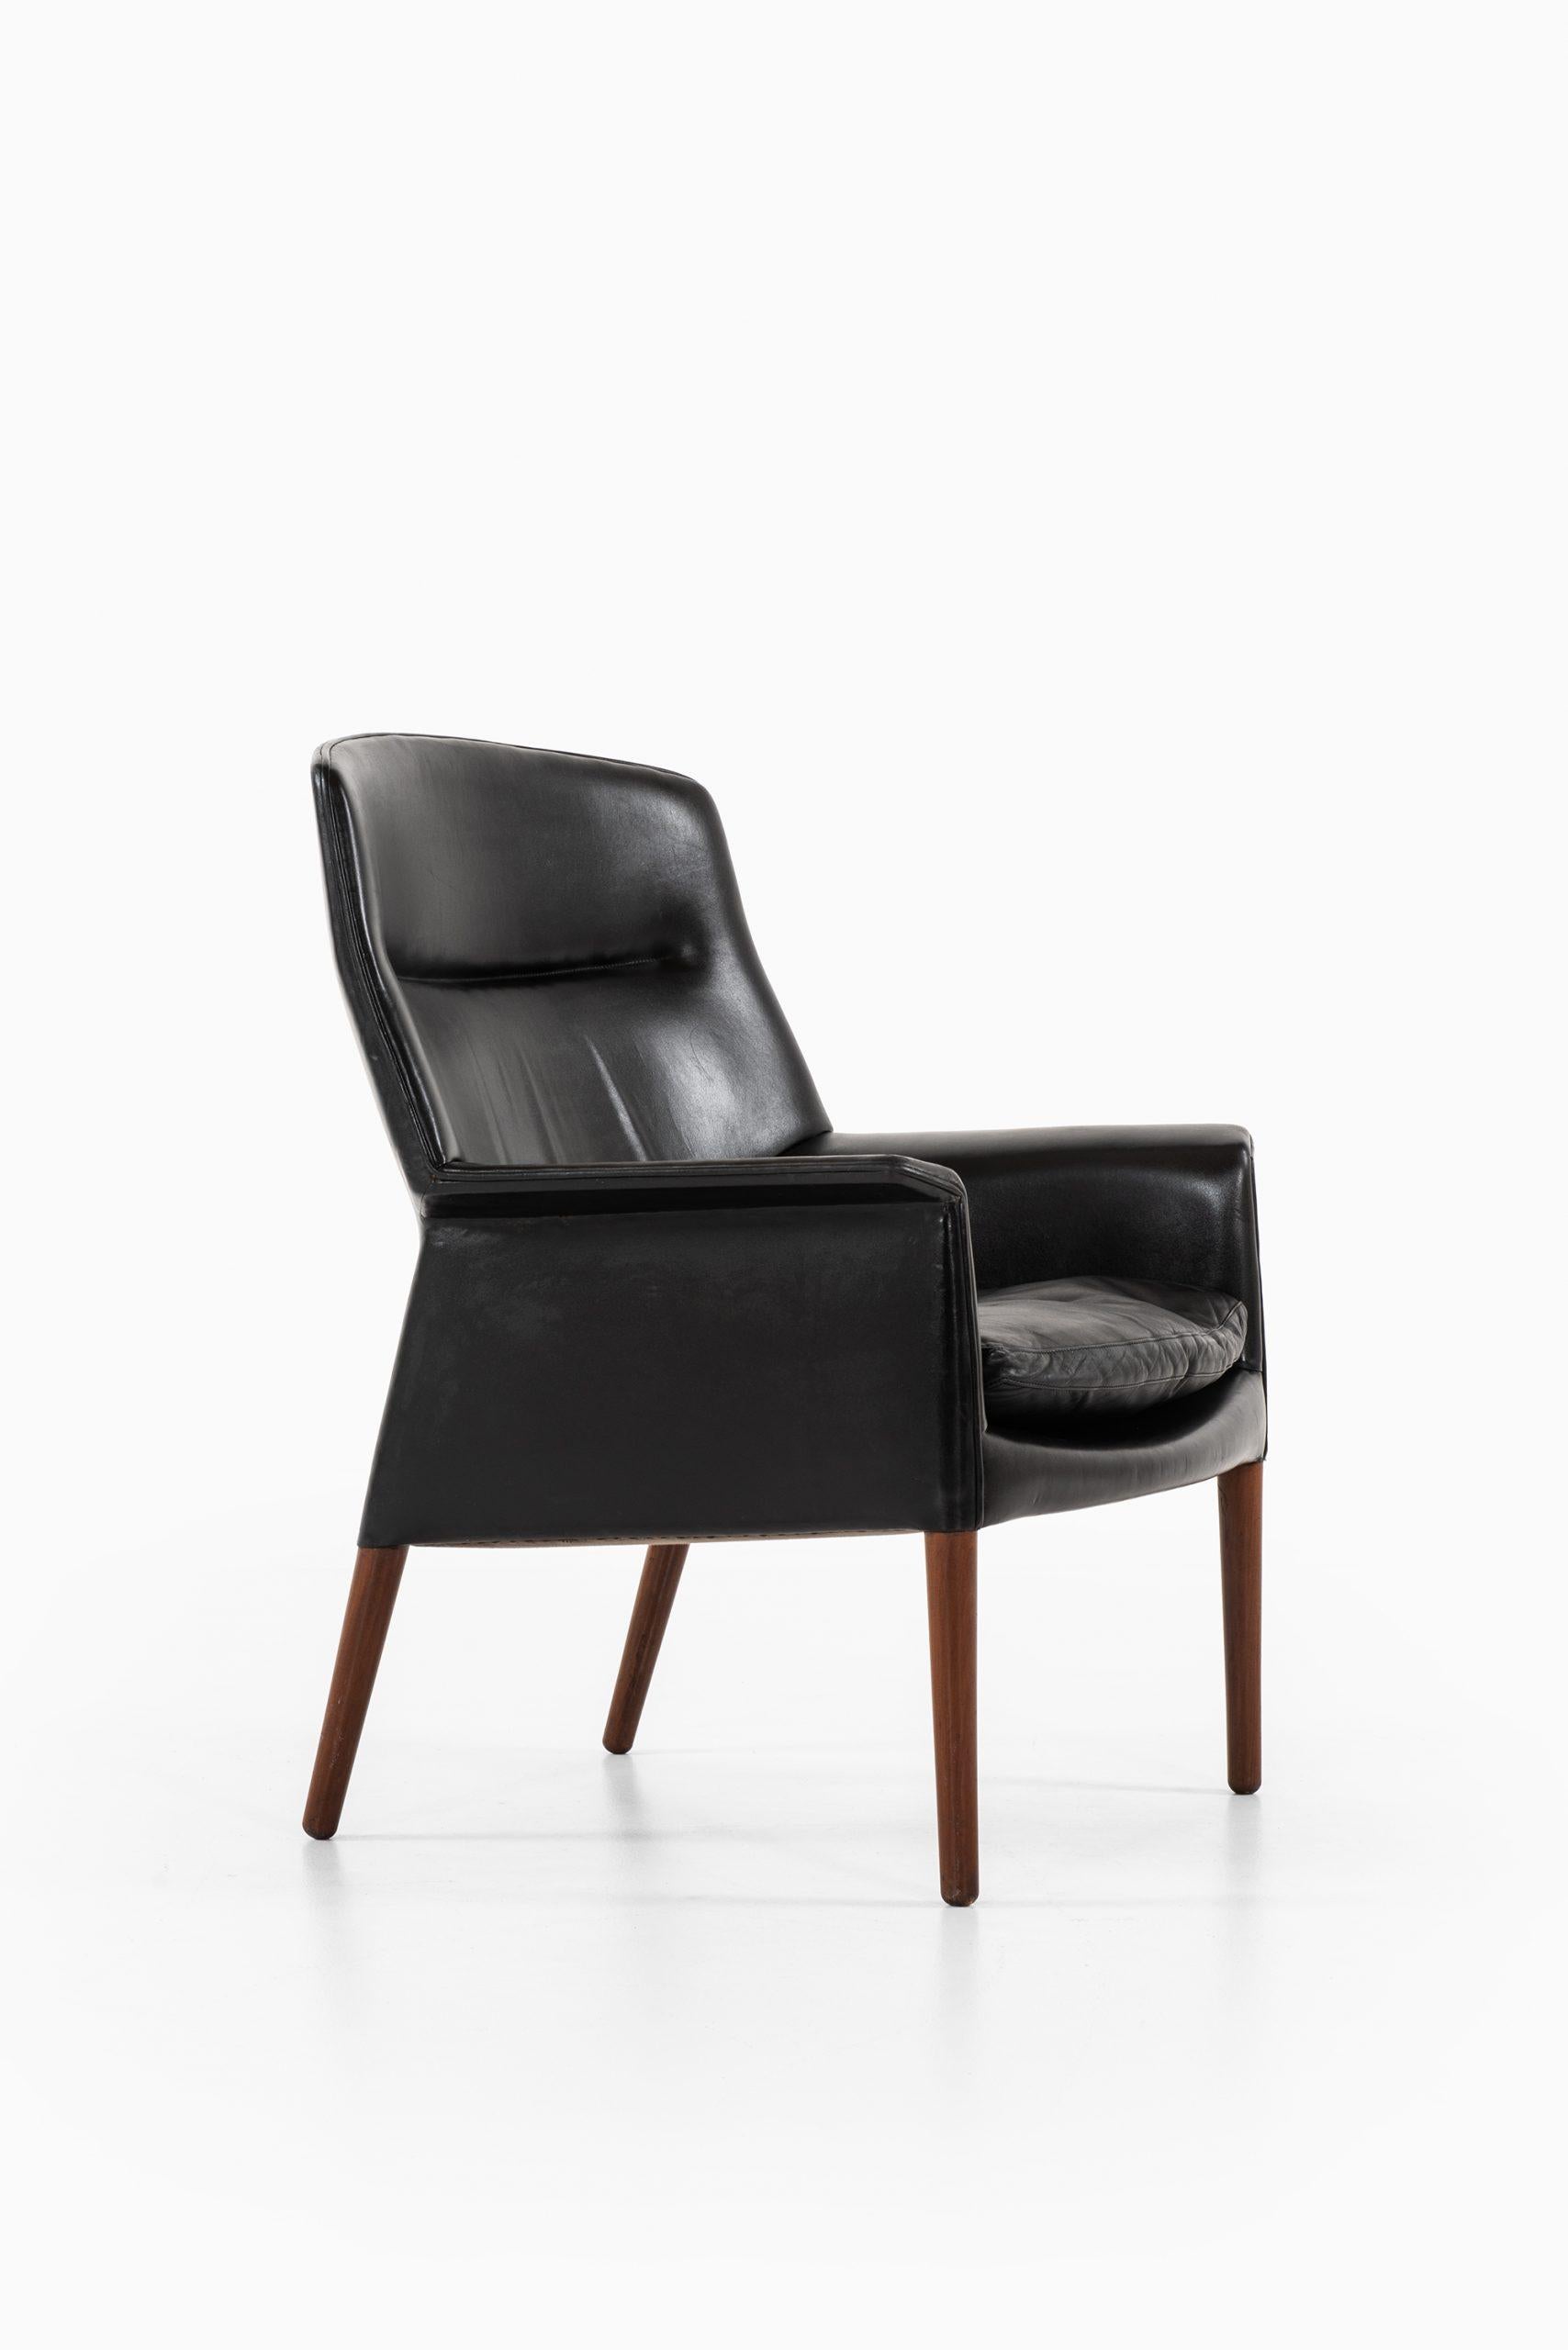 Scandinavian Modern Aksel Bender Madsen & Ejner Larsen Easy Chair by Cabinetmaker Willy Beck For Sale